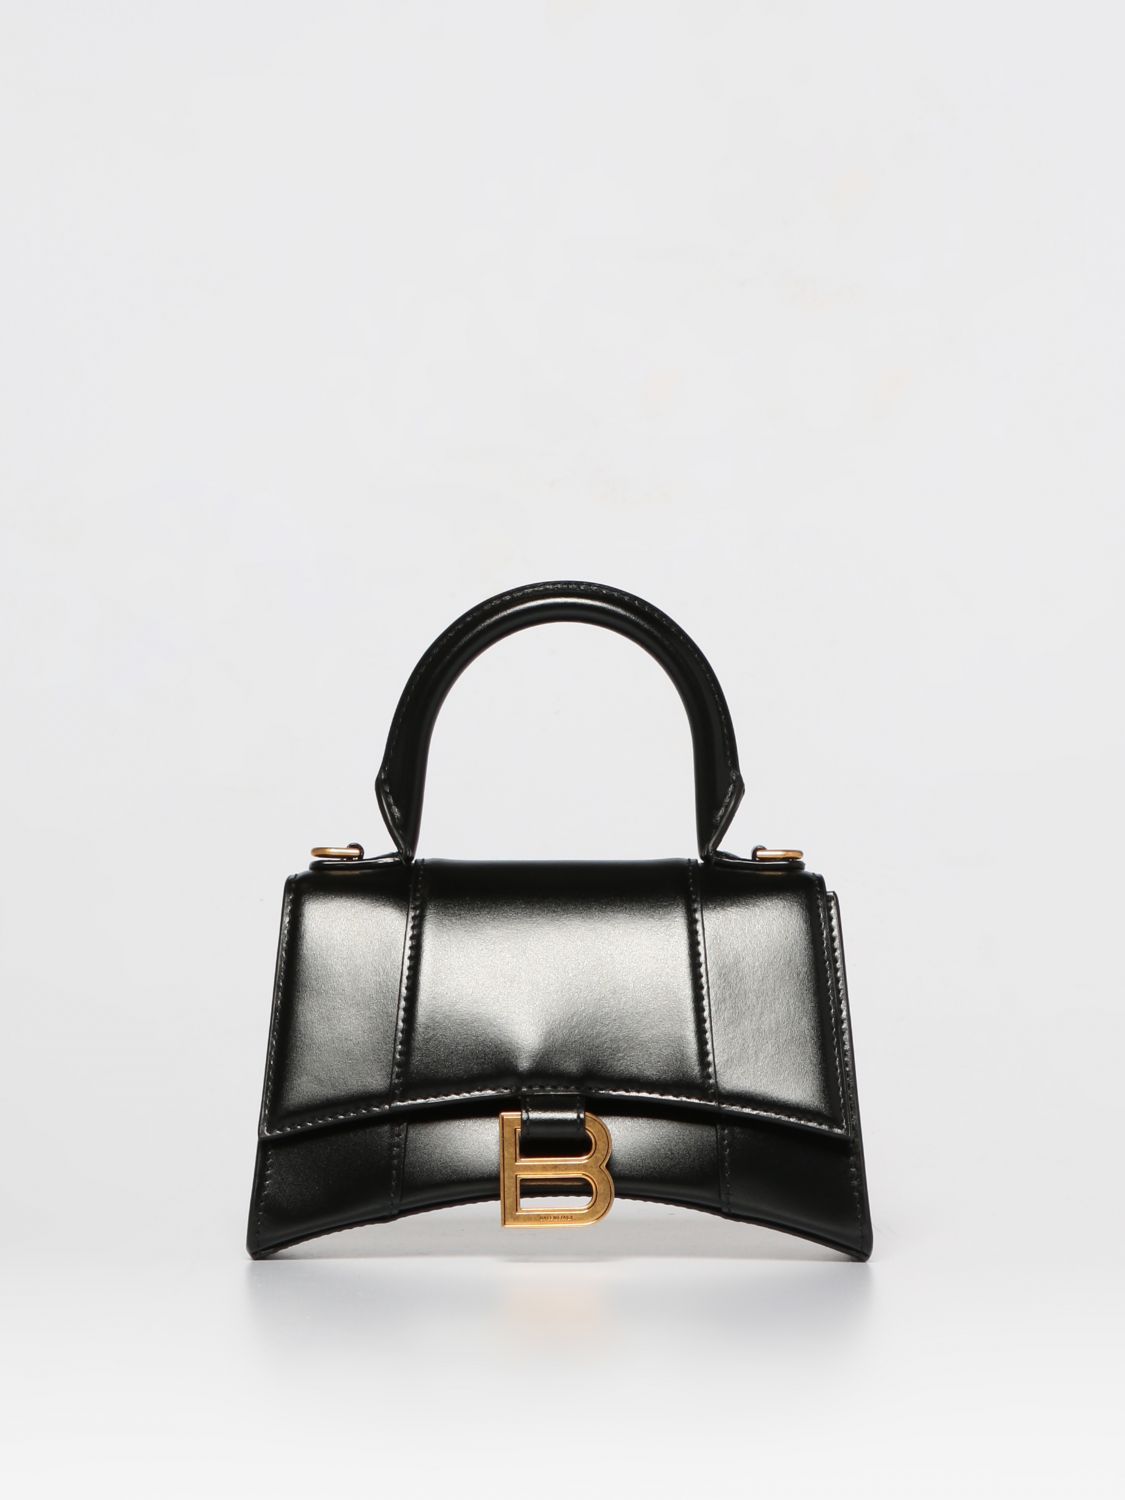 Prik Oefening Huichelaar BALENCIAGA: mini bag for woman - Black | Balenciaga mini bag 592833 1QJ4M  online on GIGLIO.COM